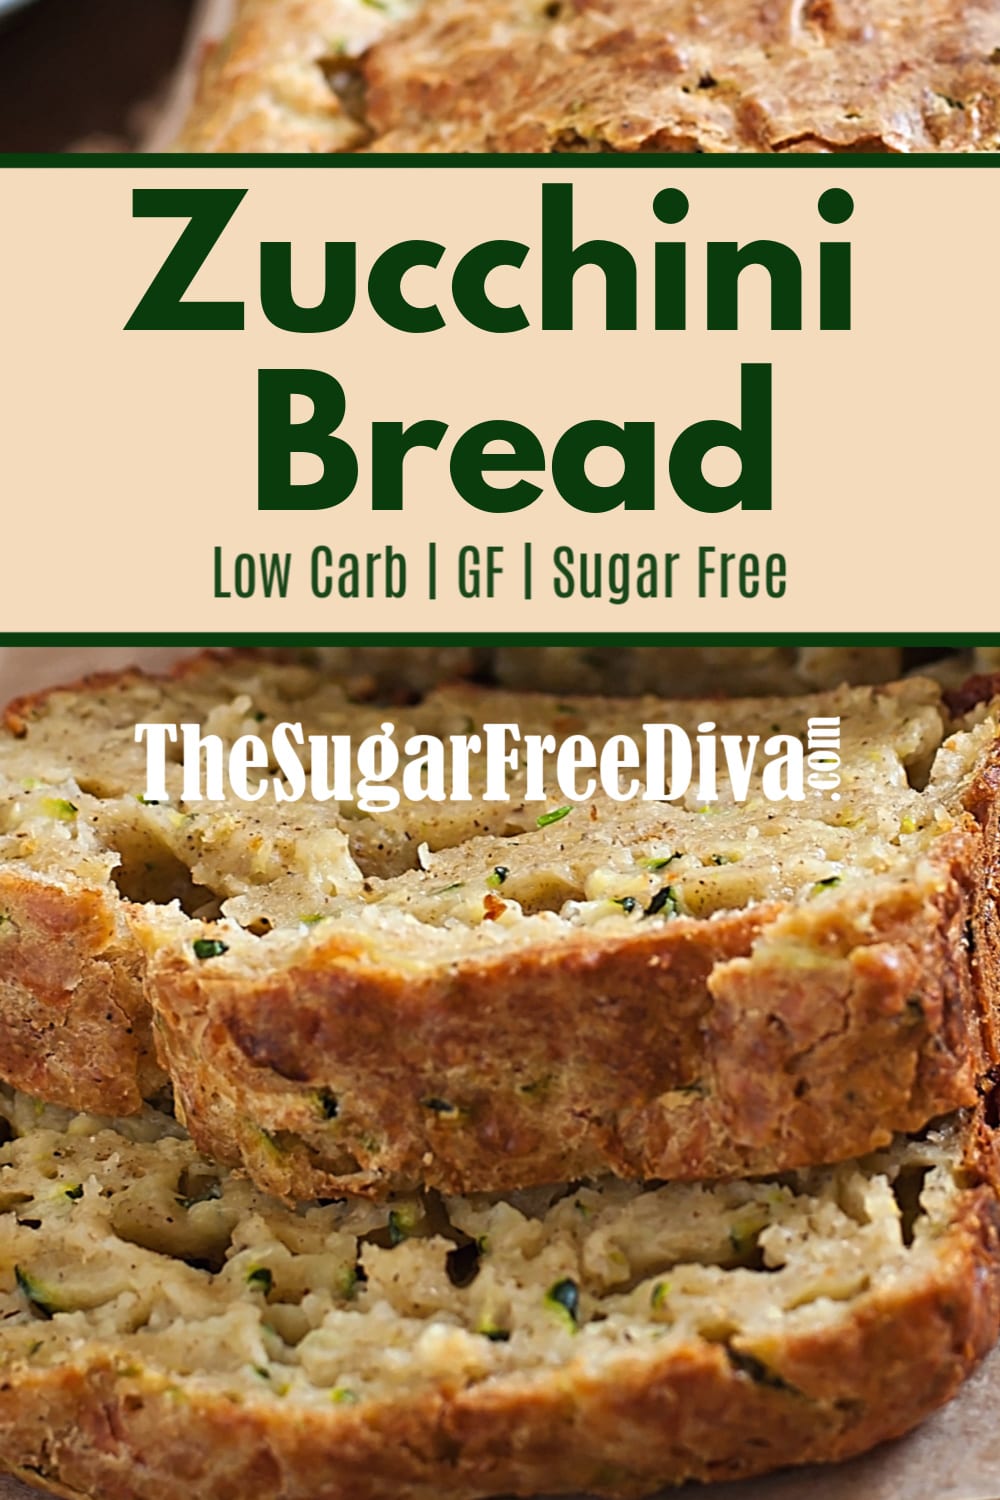 Sugar Free Homemade Zucchini Bread The Sugar Free Diva,How To Make Long Island Iced Tea By The Gallon